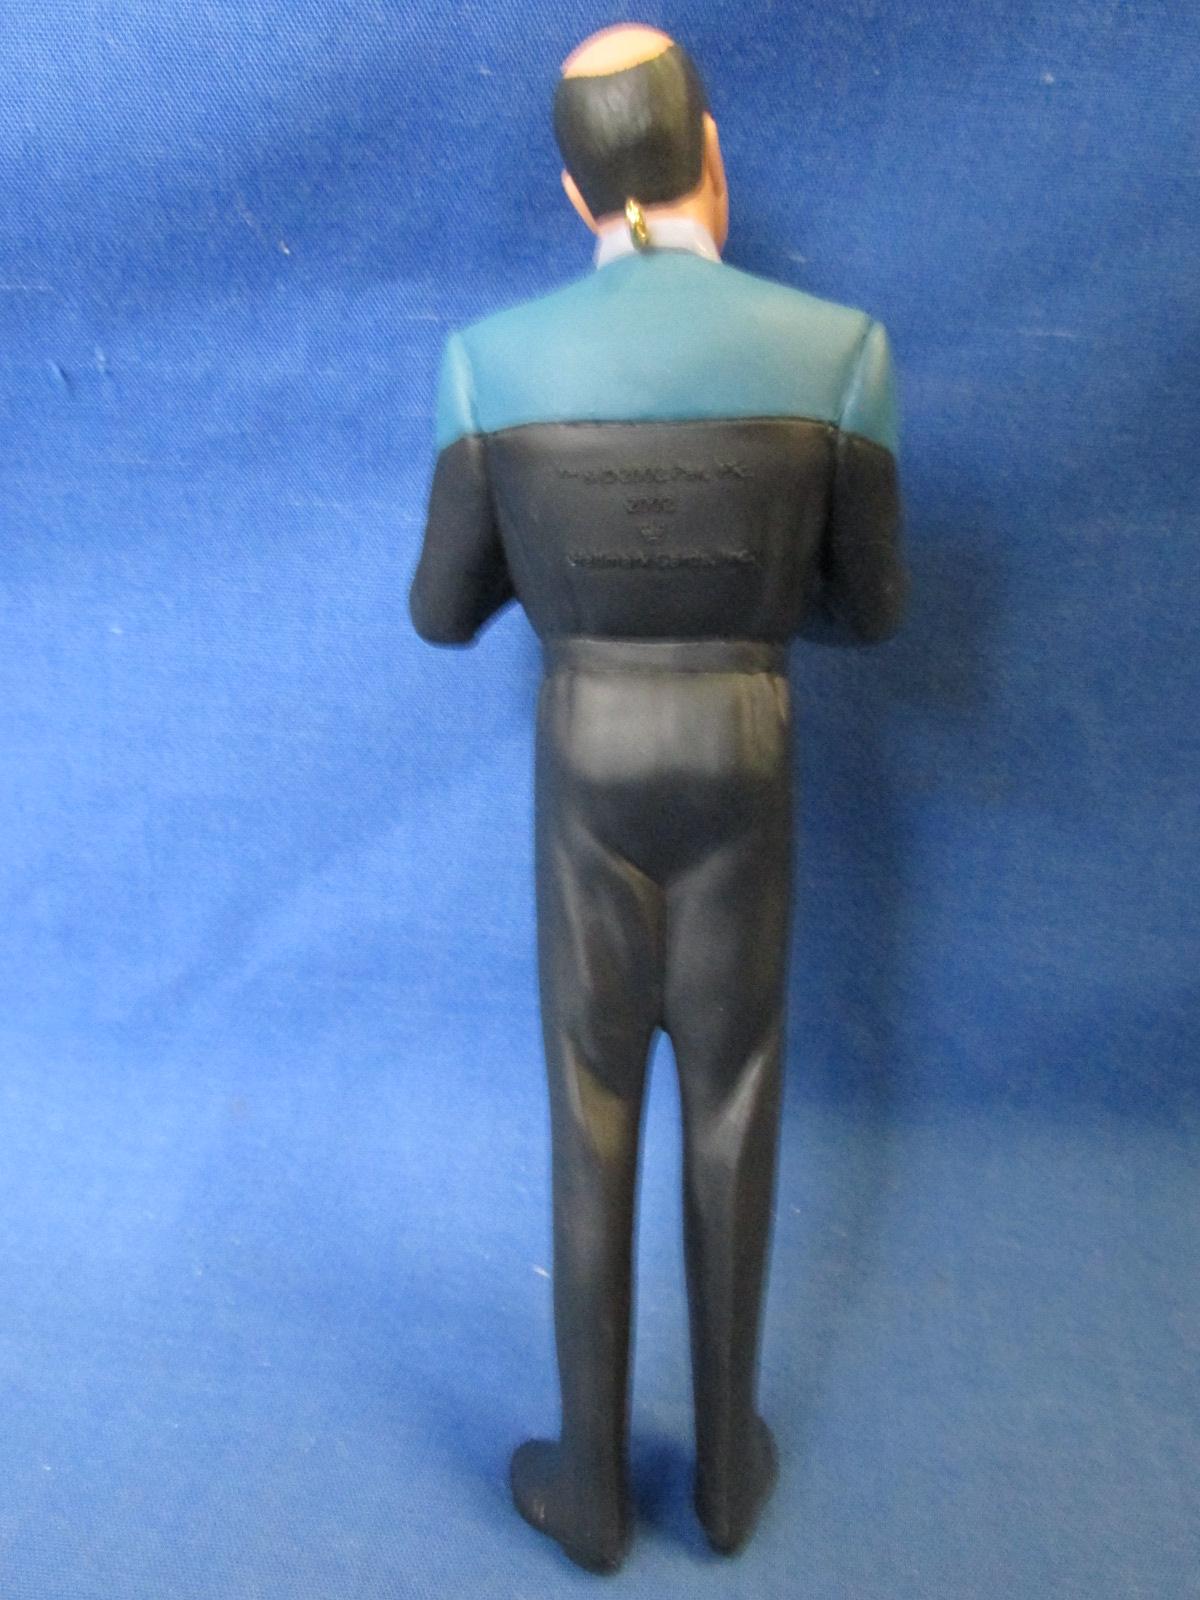 Hallmark Keepsake Ornament:Star Trek Voyager The Doctor- 2002